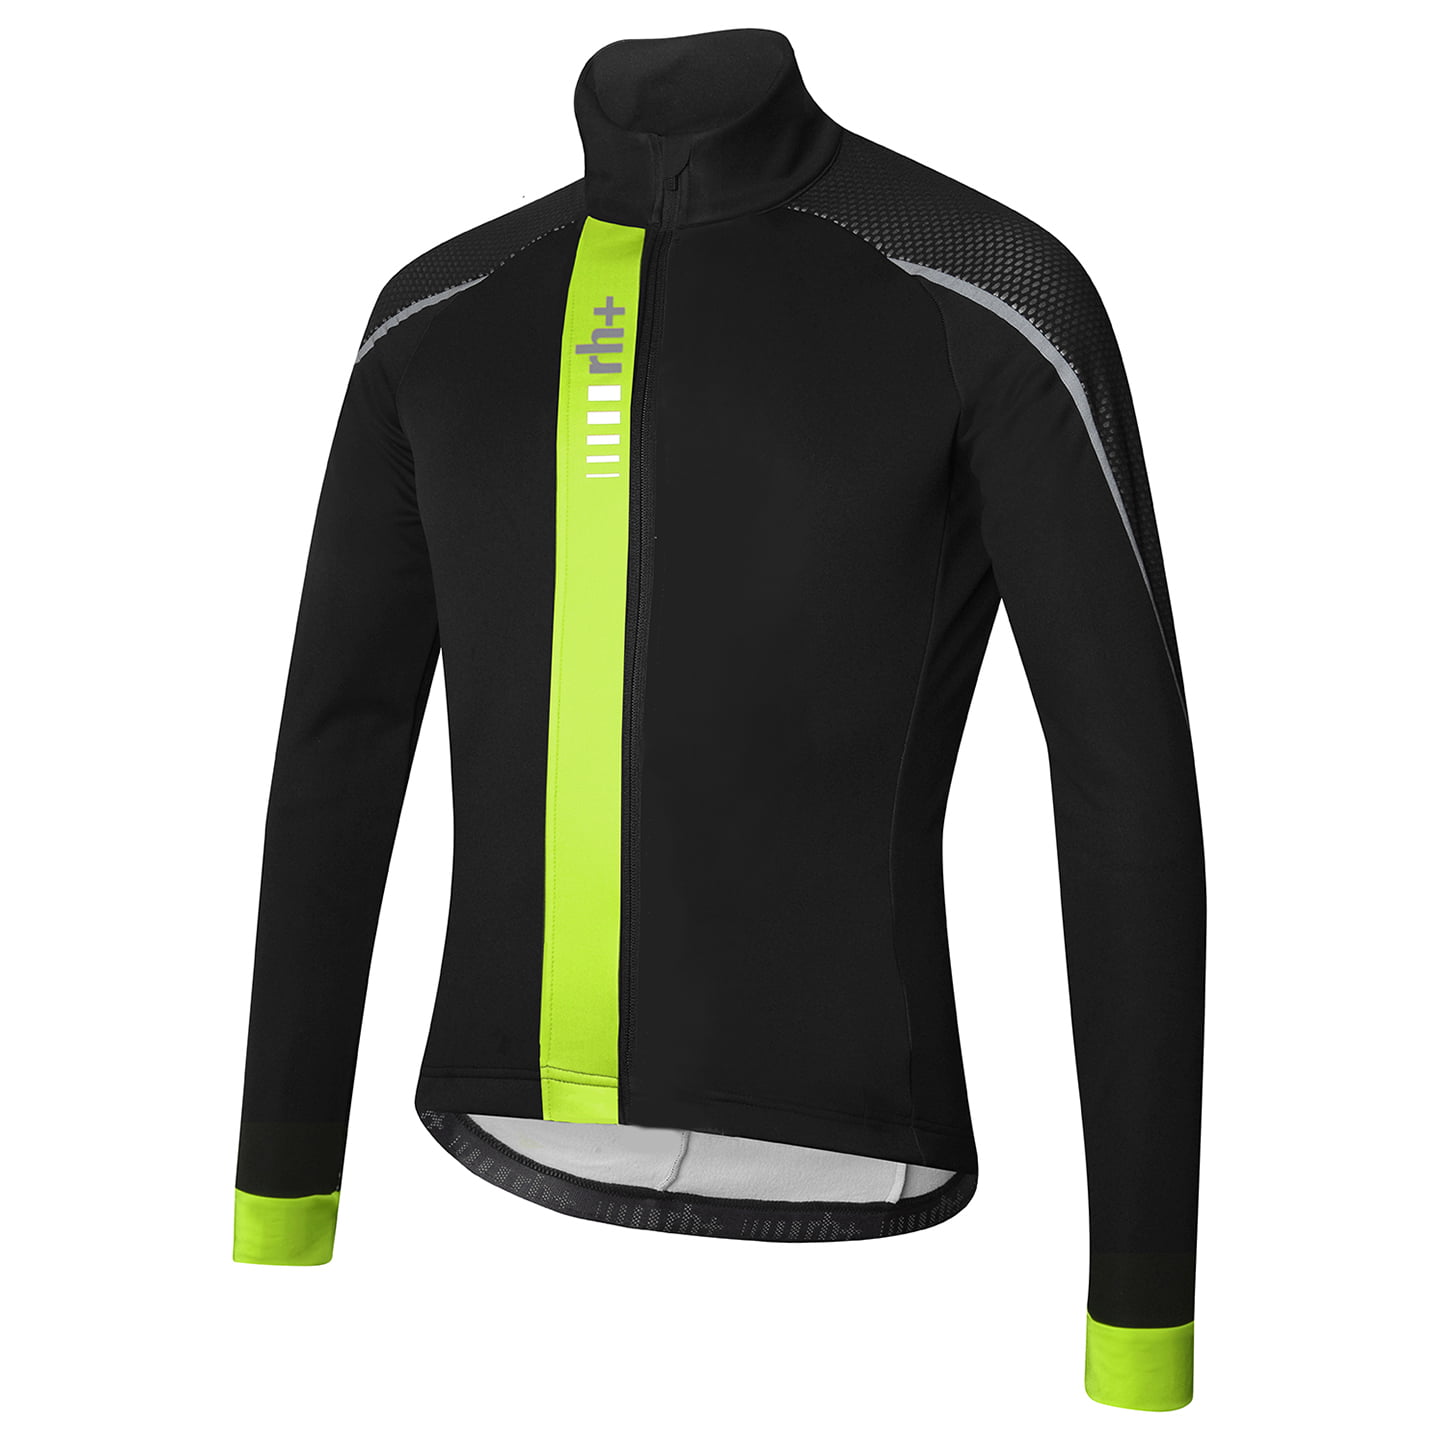 RH+ Code II Winter Jacket, for men, size 2XL, Winter jacket, Cycling clothing